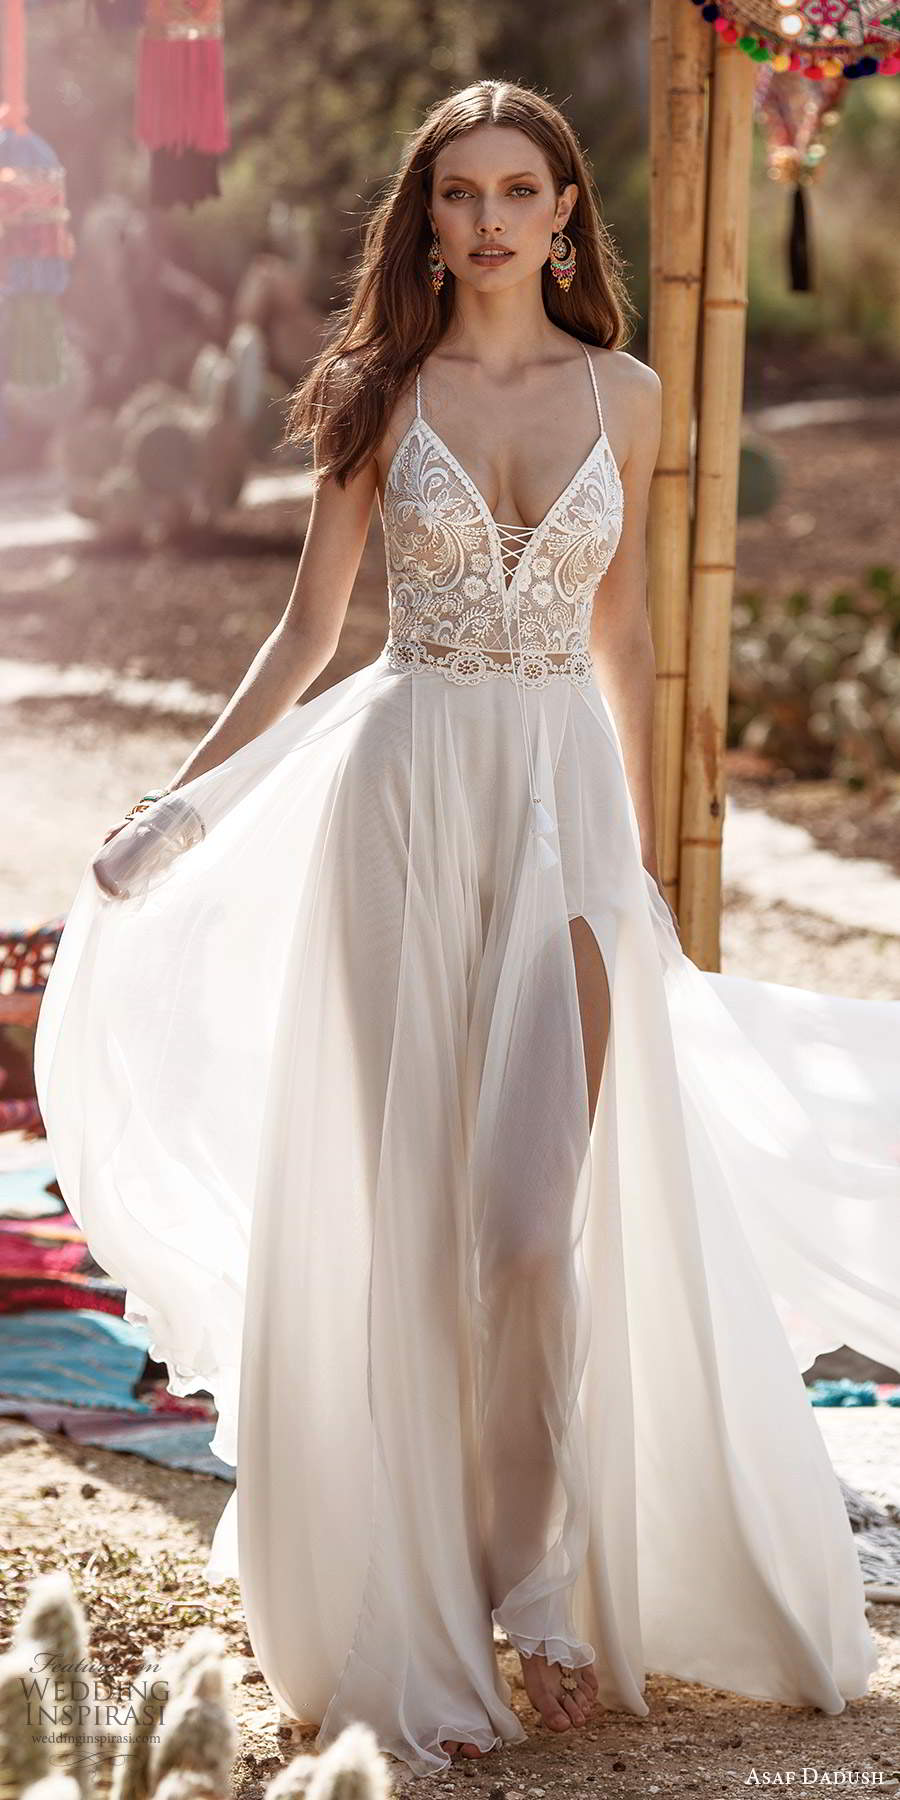 asaf dadush 2020 bridal sleeveless thin straps plunging v neckline embellished bodice clean skirt a line wedding dress slit skirt low back (3) mv